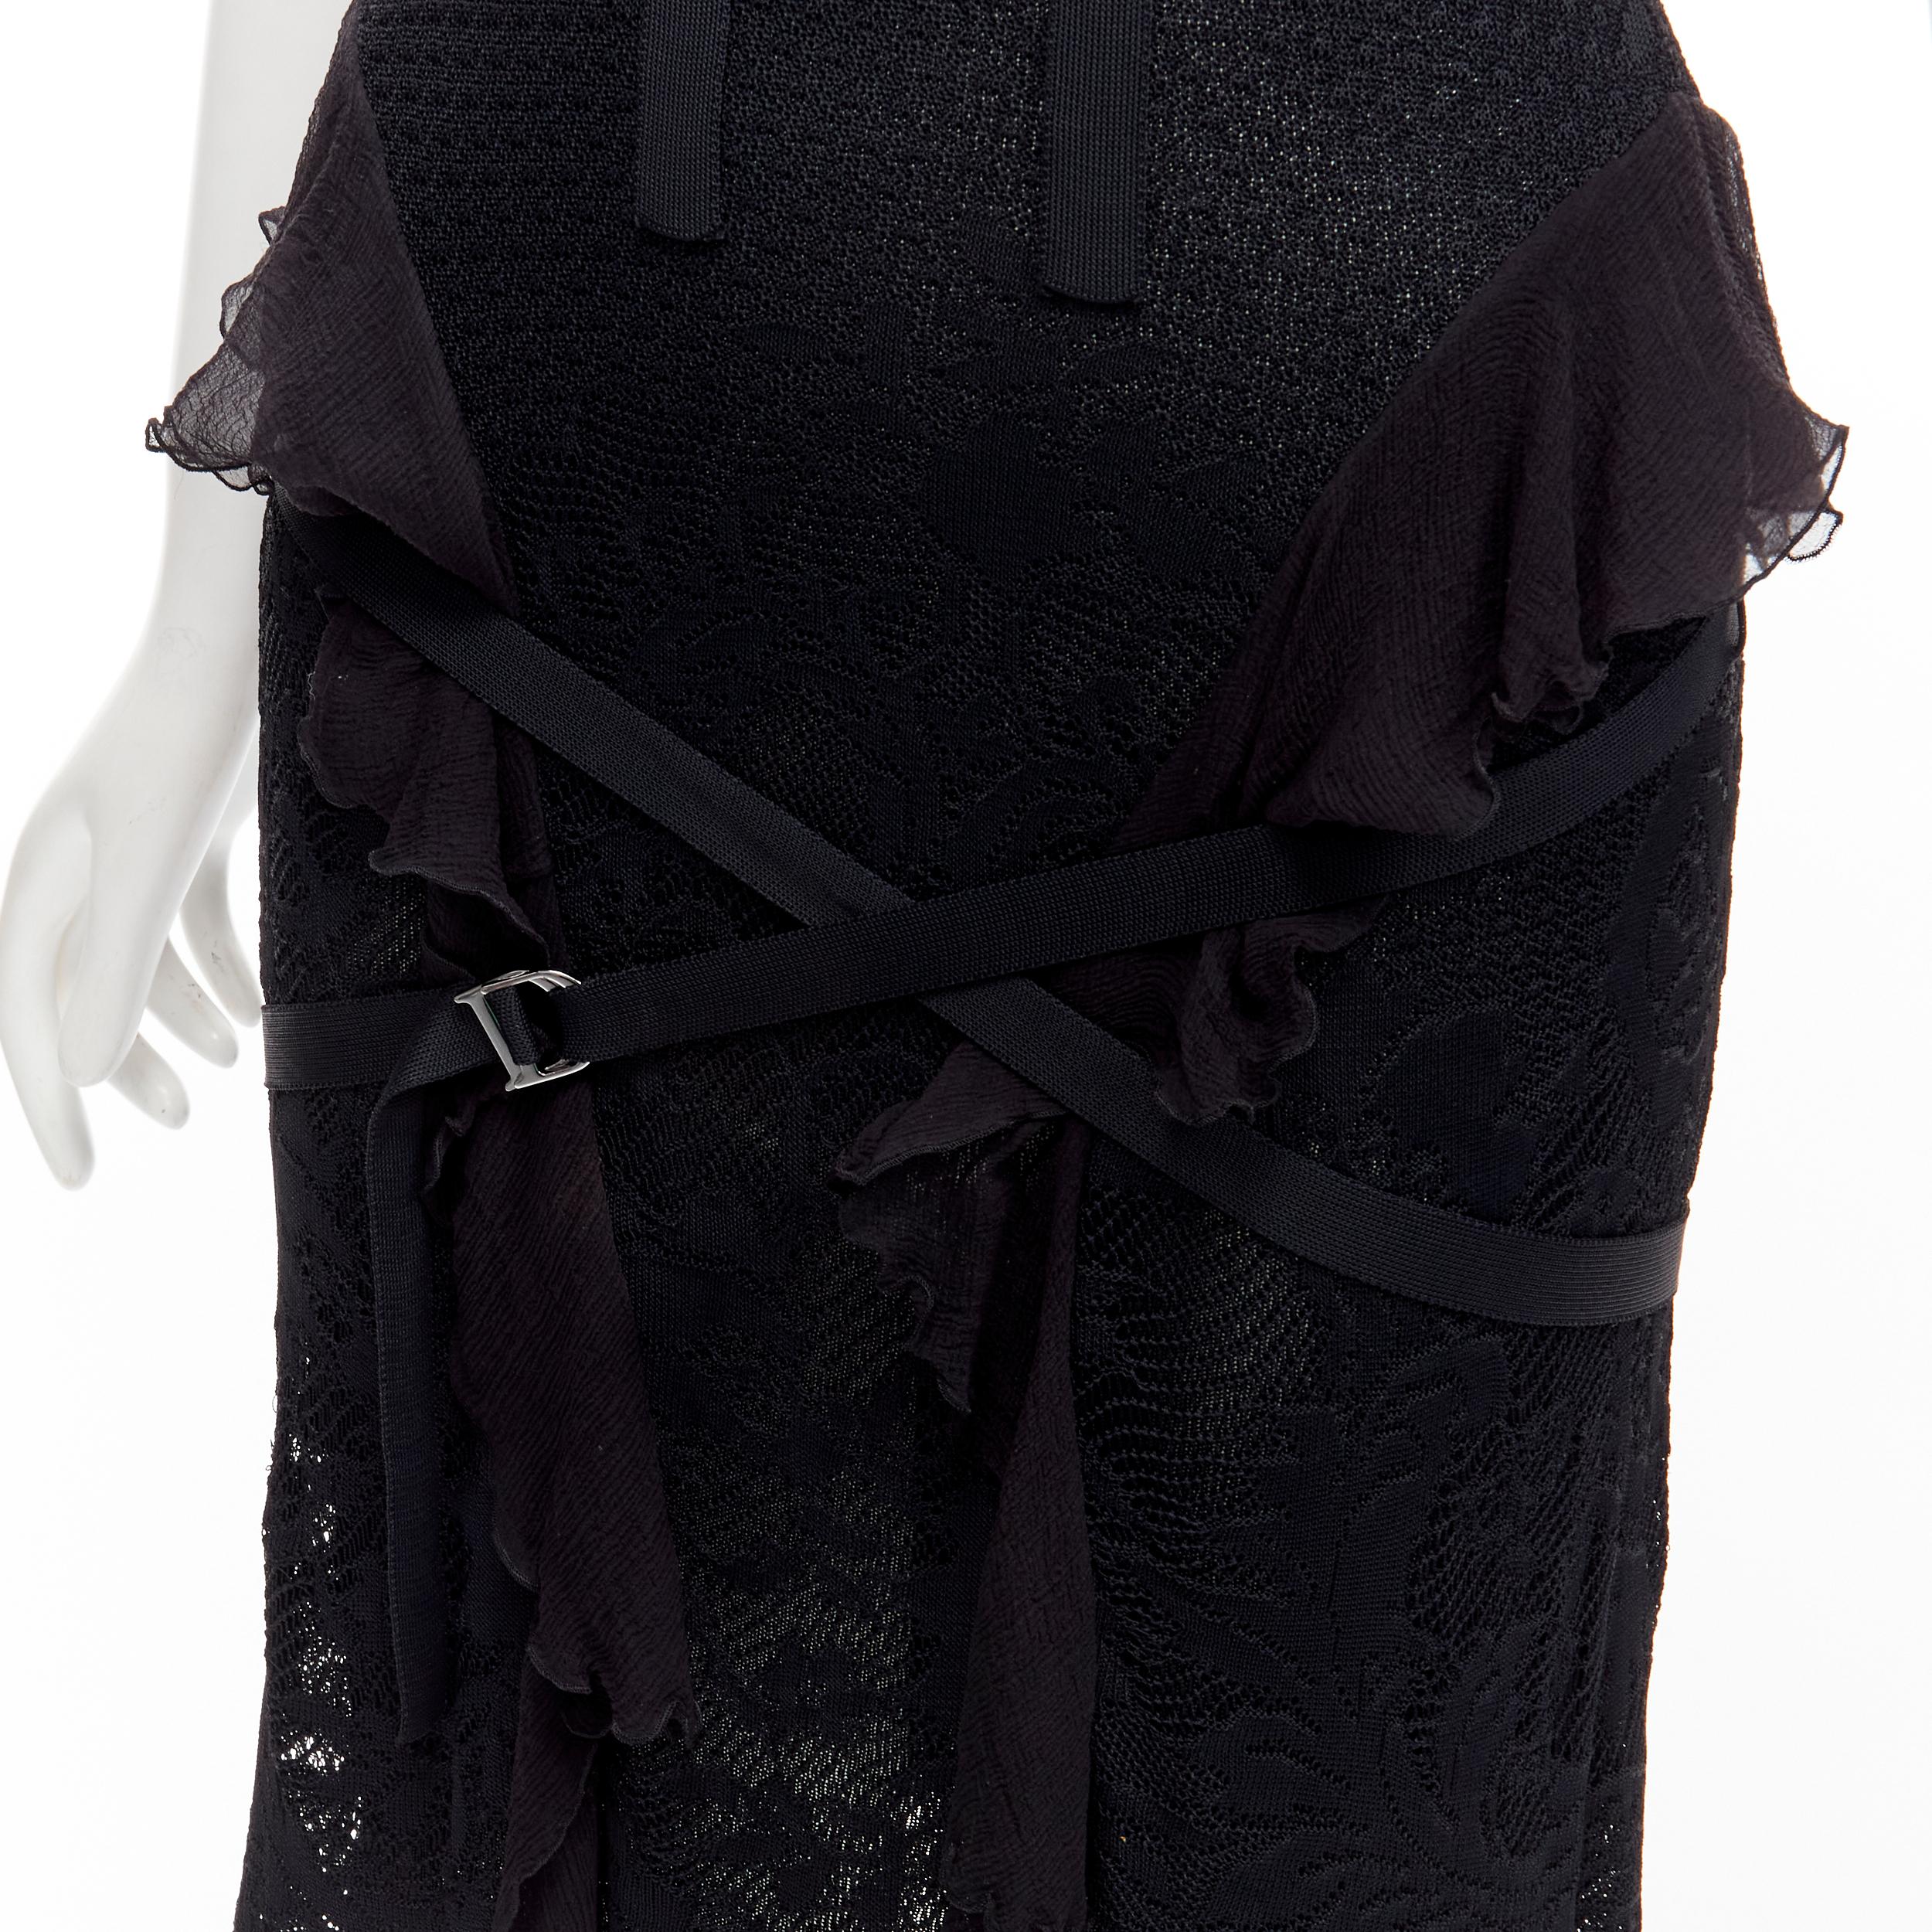 CHRISTIAN DIOR John Galliano black CD logo bondage floral knit dress FR36 S 3